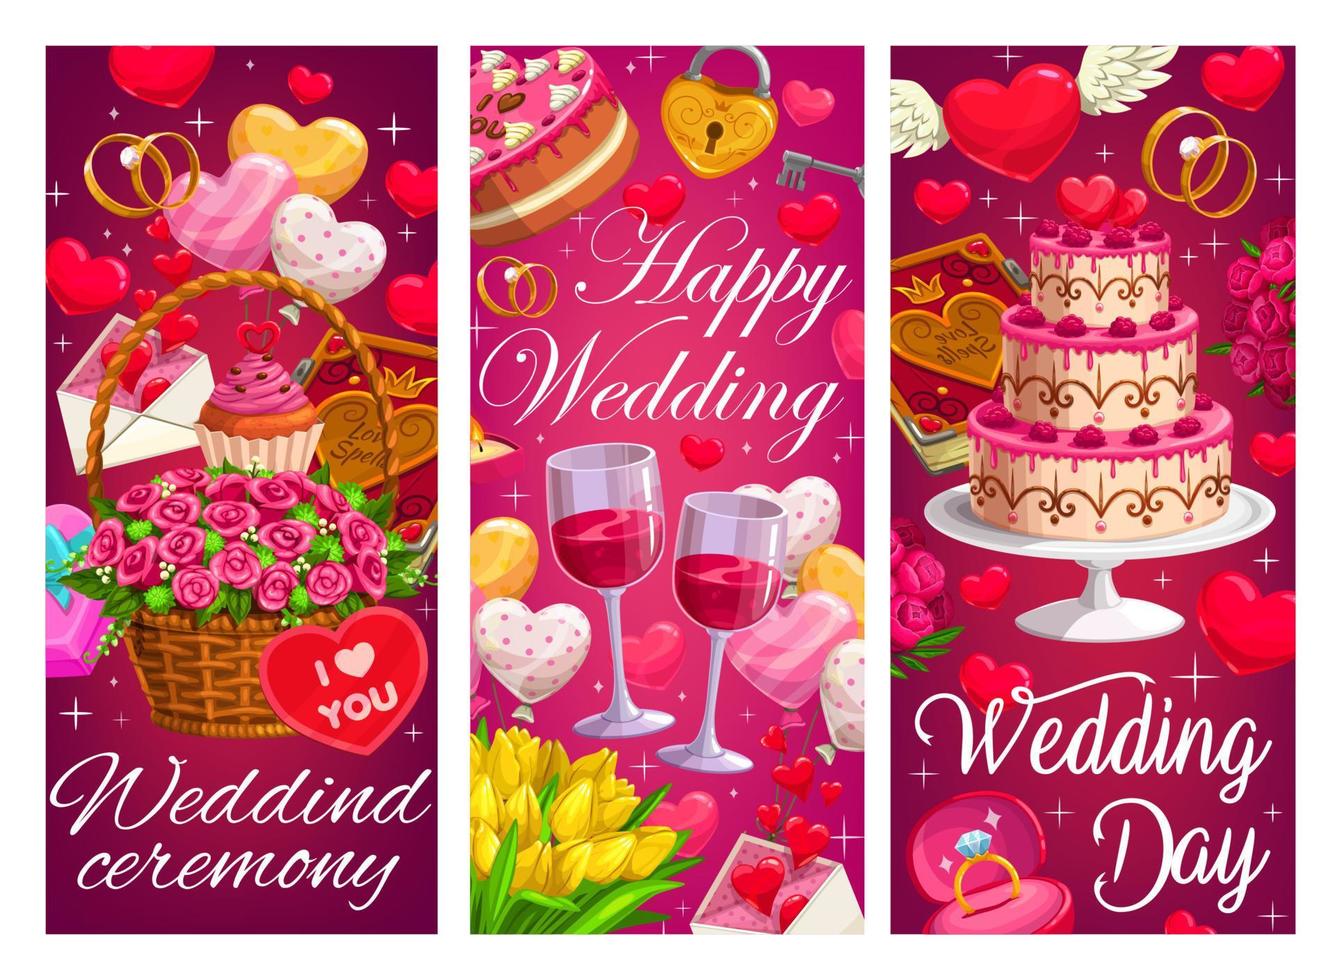 Wedding, marriage ceremony vector cartoon banners